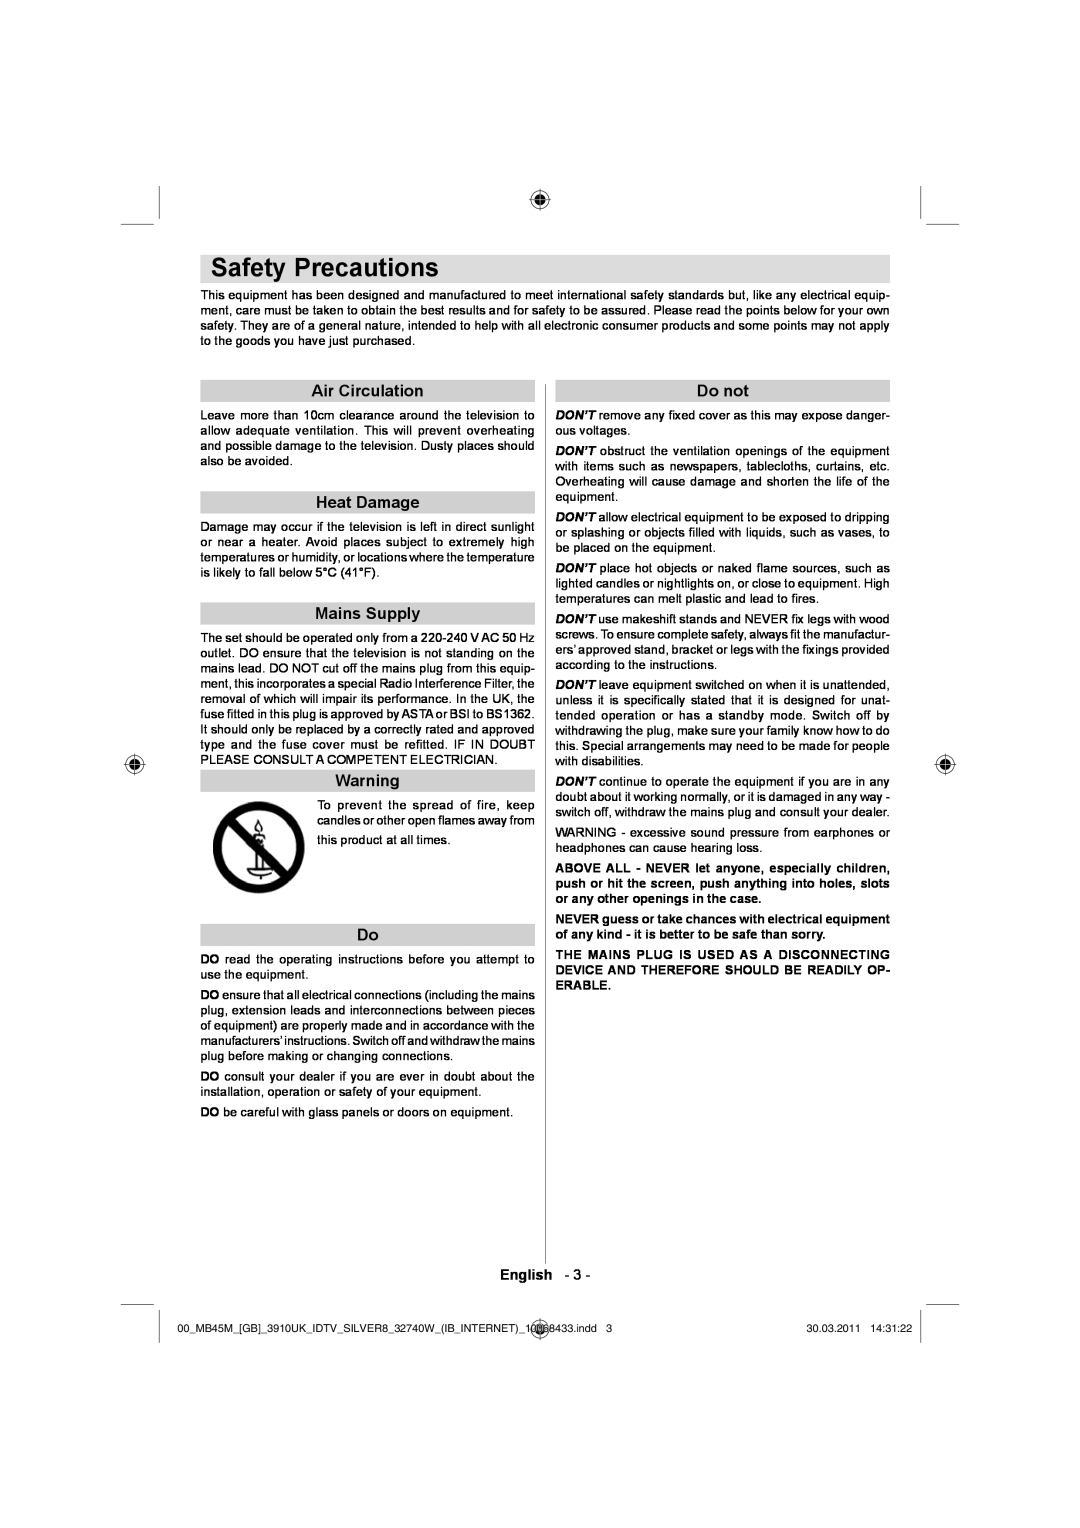 Toshiba 32BV500B owner manual Safety Precautions, Air Circulation, Heat Damage, Mains Supply, Do not 